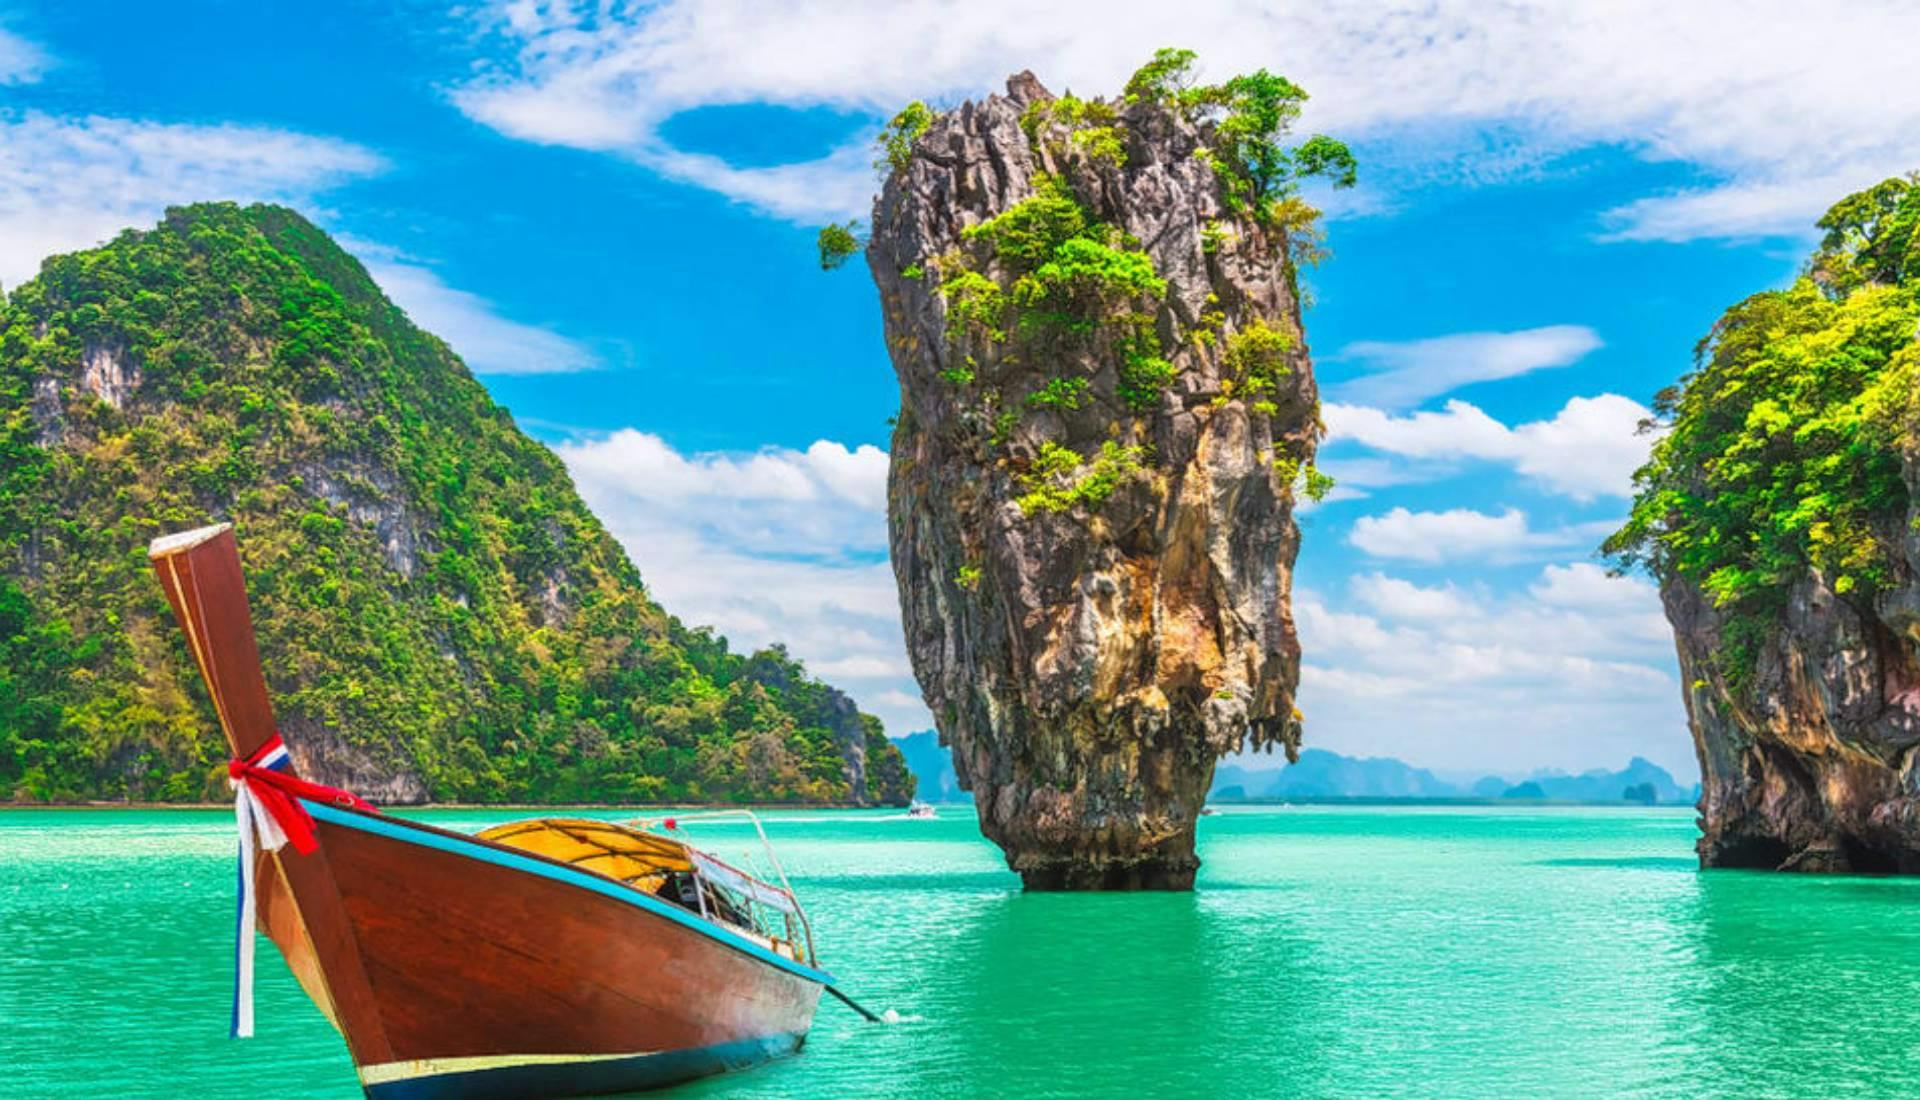 Ganztagesausflug von Phuket nach Phang Nga Bay mit Bootsfahrt